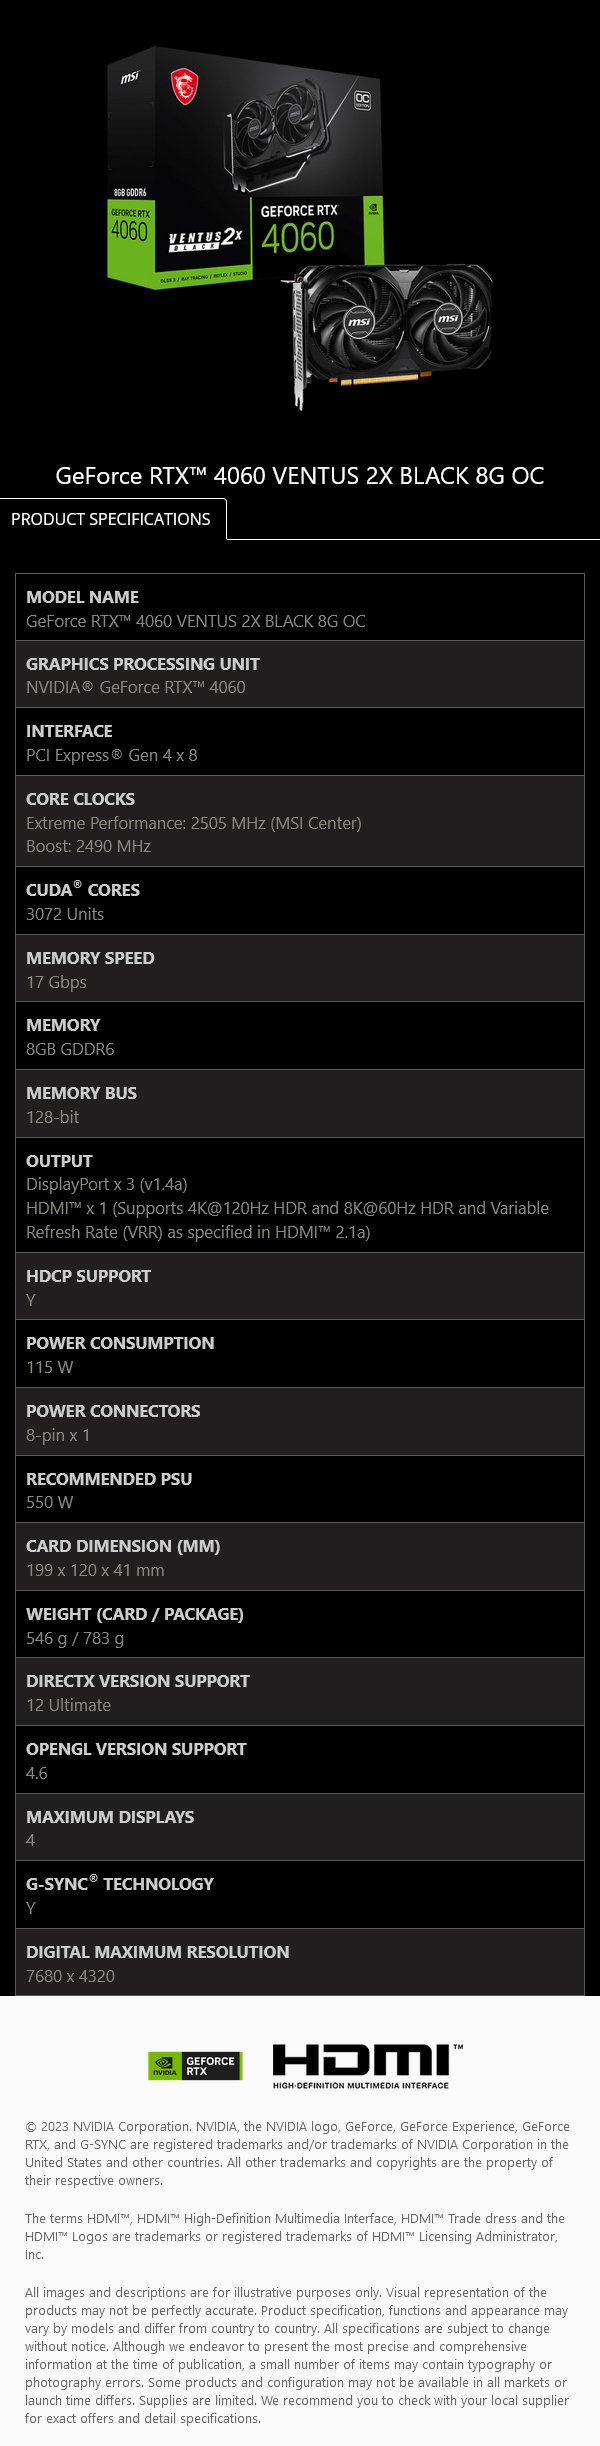 MSI GeForce RTX 4060 VENTUS 2X BLACK OC 8GB Video Card - Desktop Overview 8